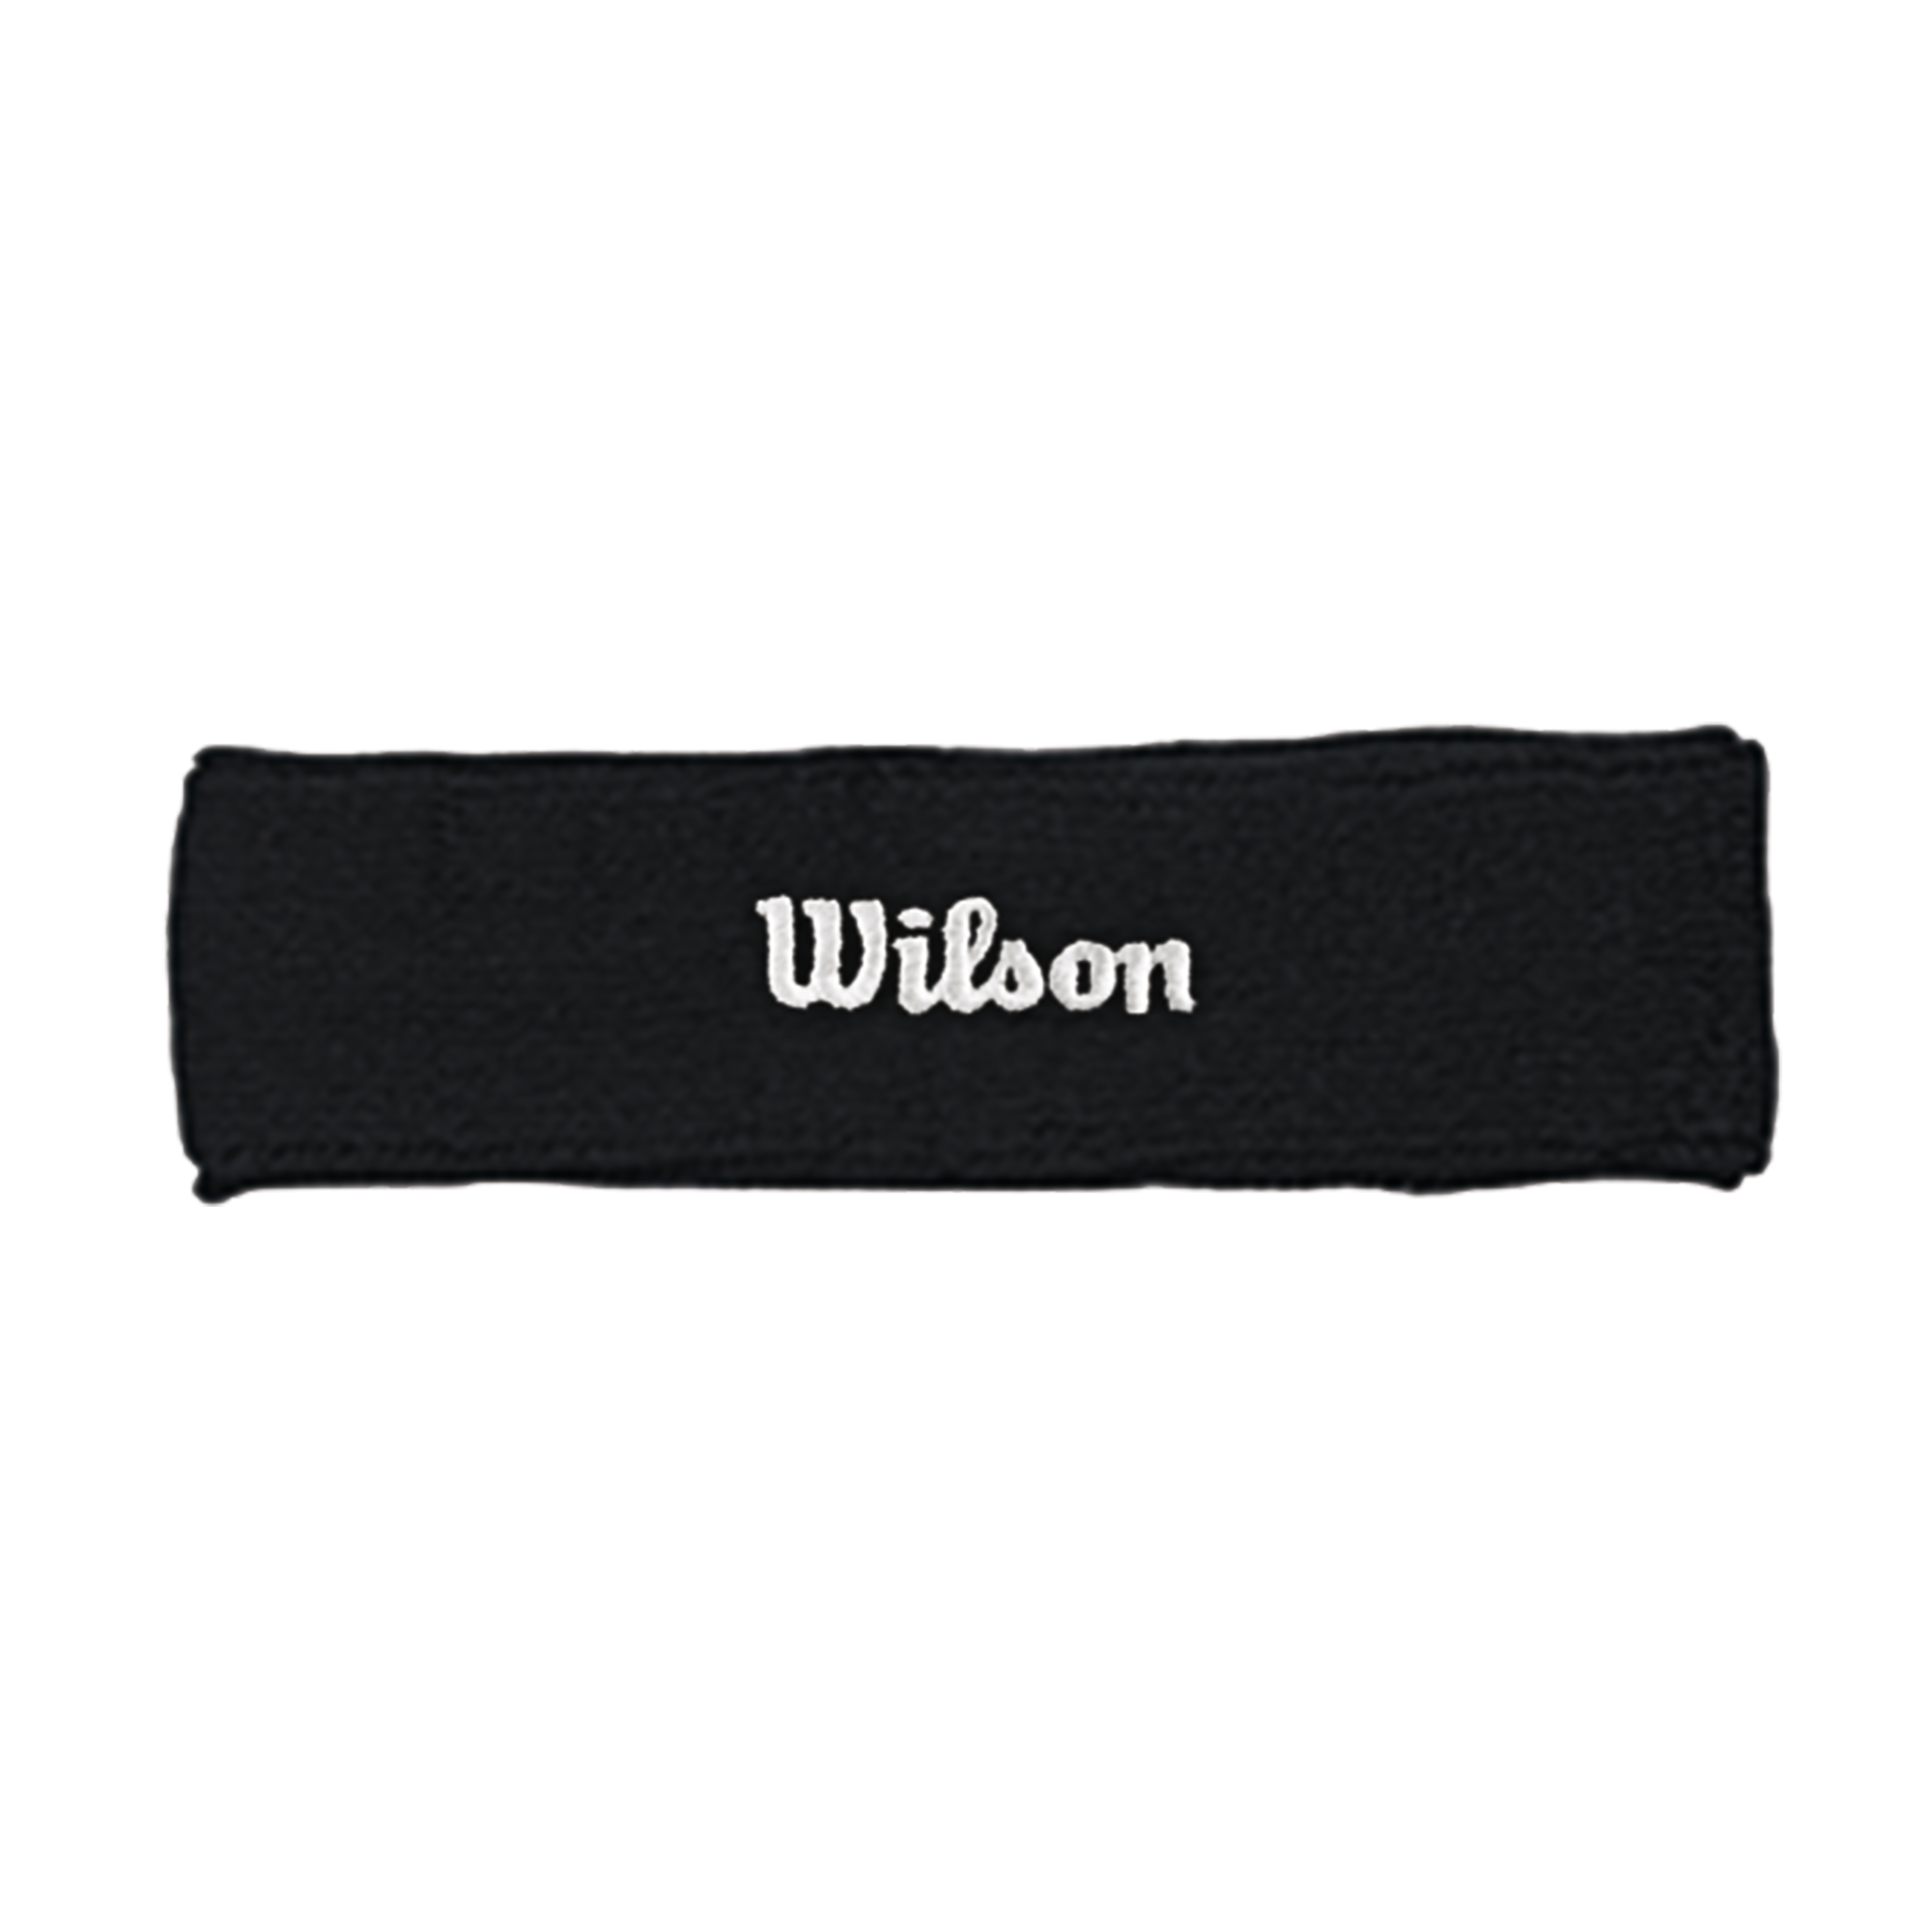 Wilson Tennis Headband